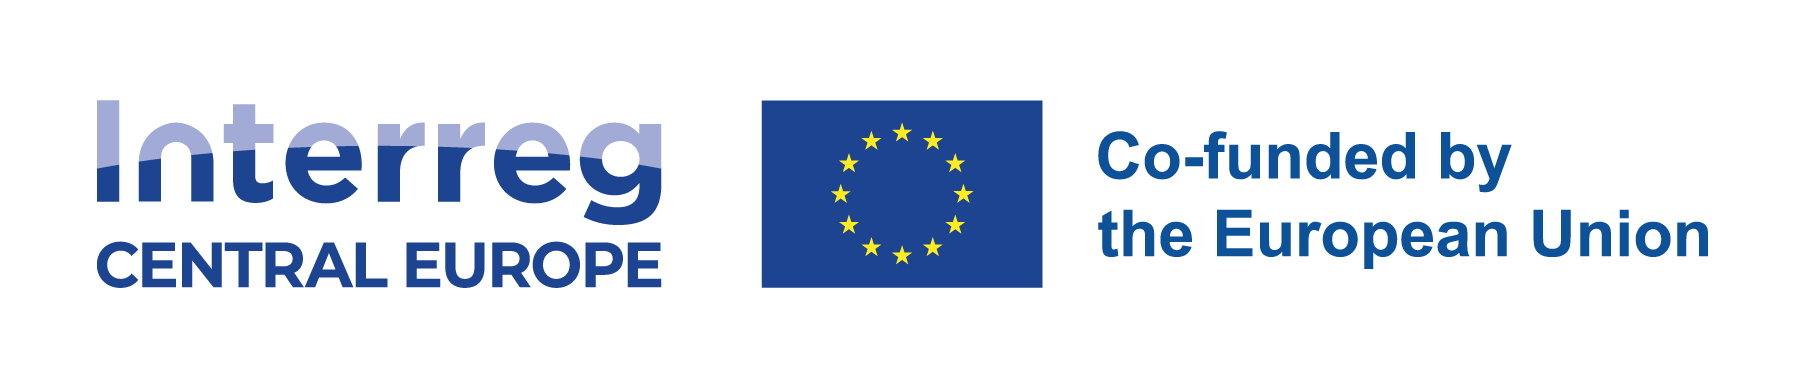 logo programu Interreg Europa Środkowa